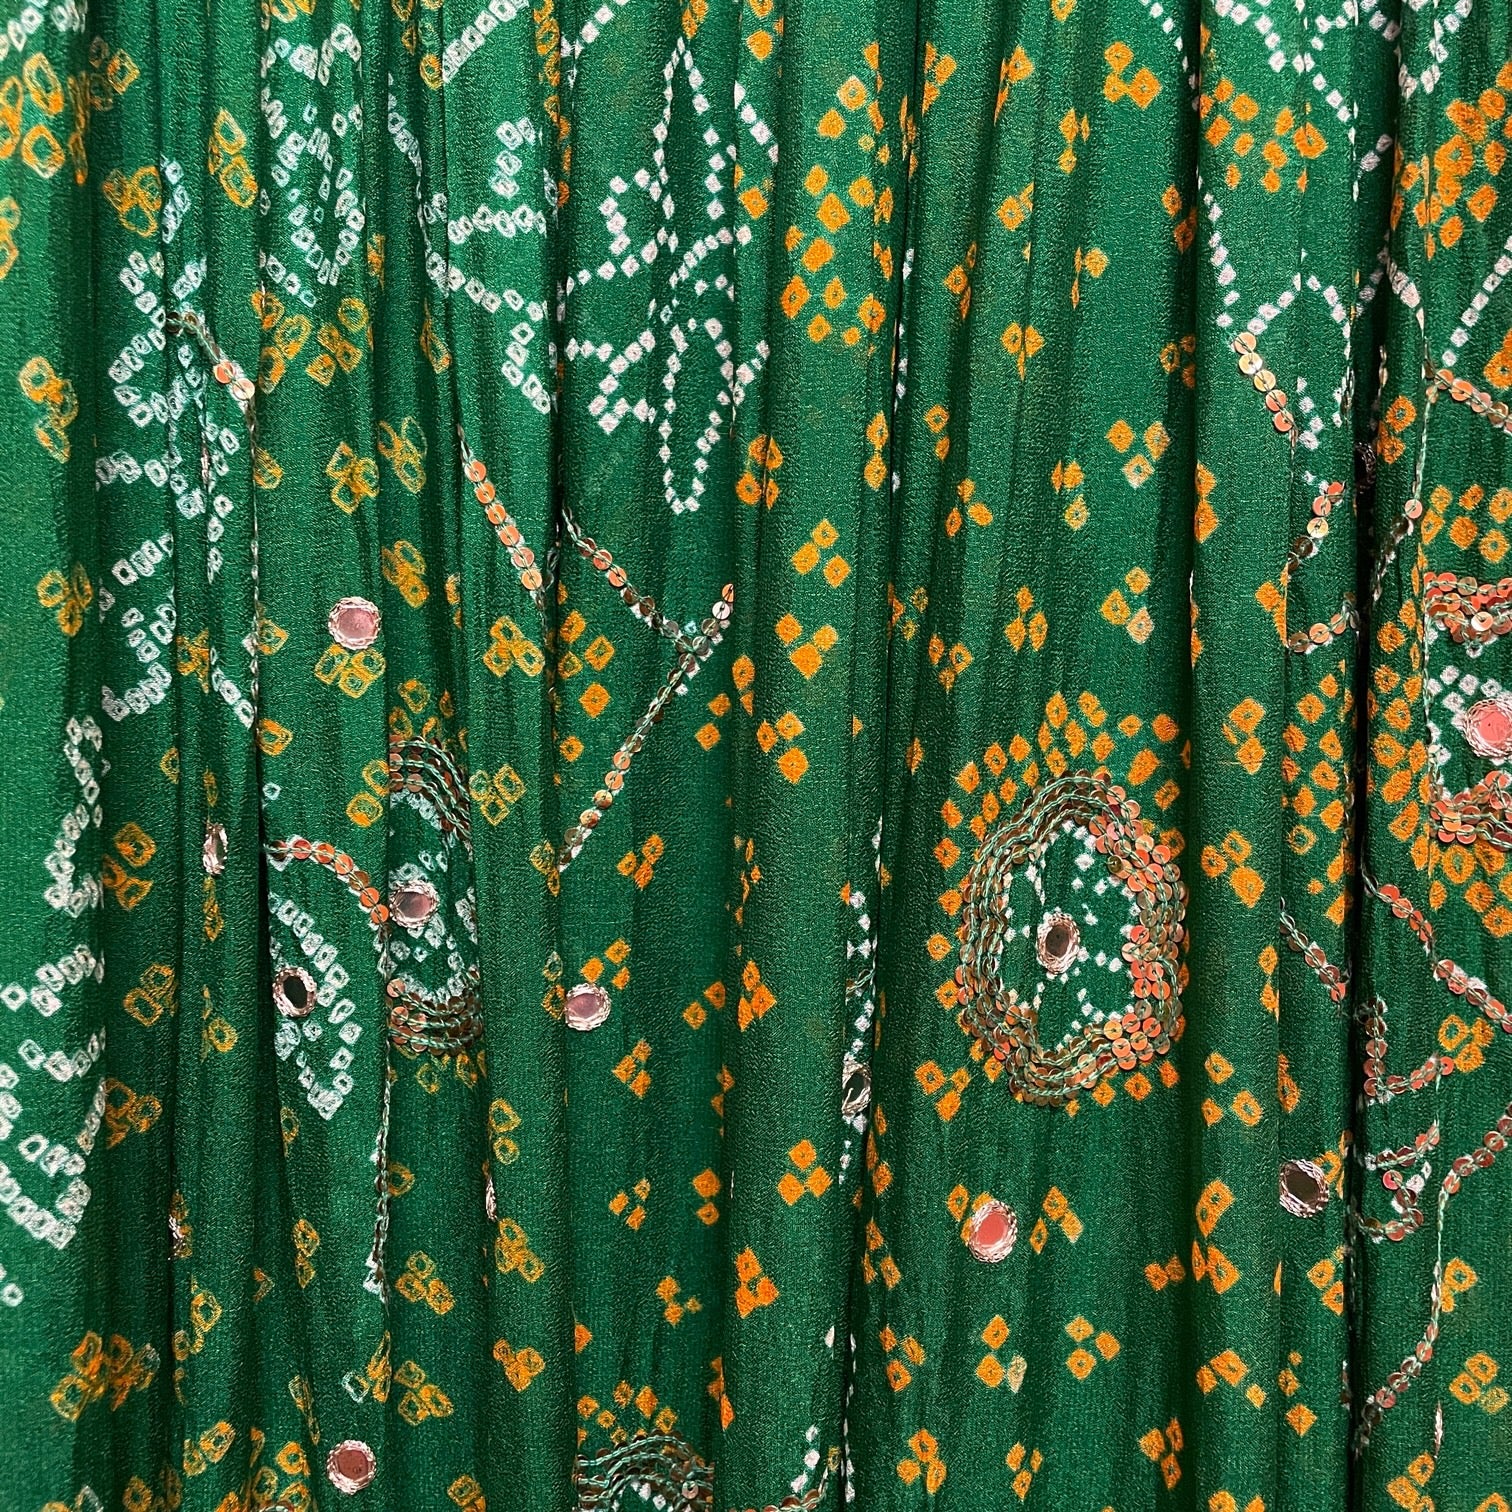 Vintage Green Silk Bandhani Lehenga - Vintage India NYC